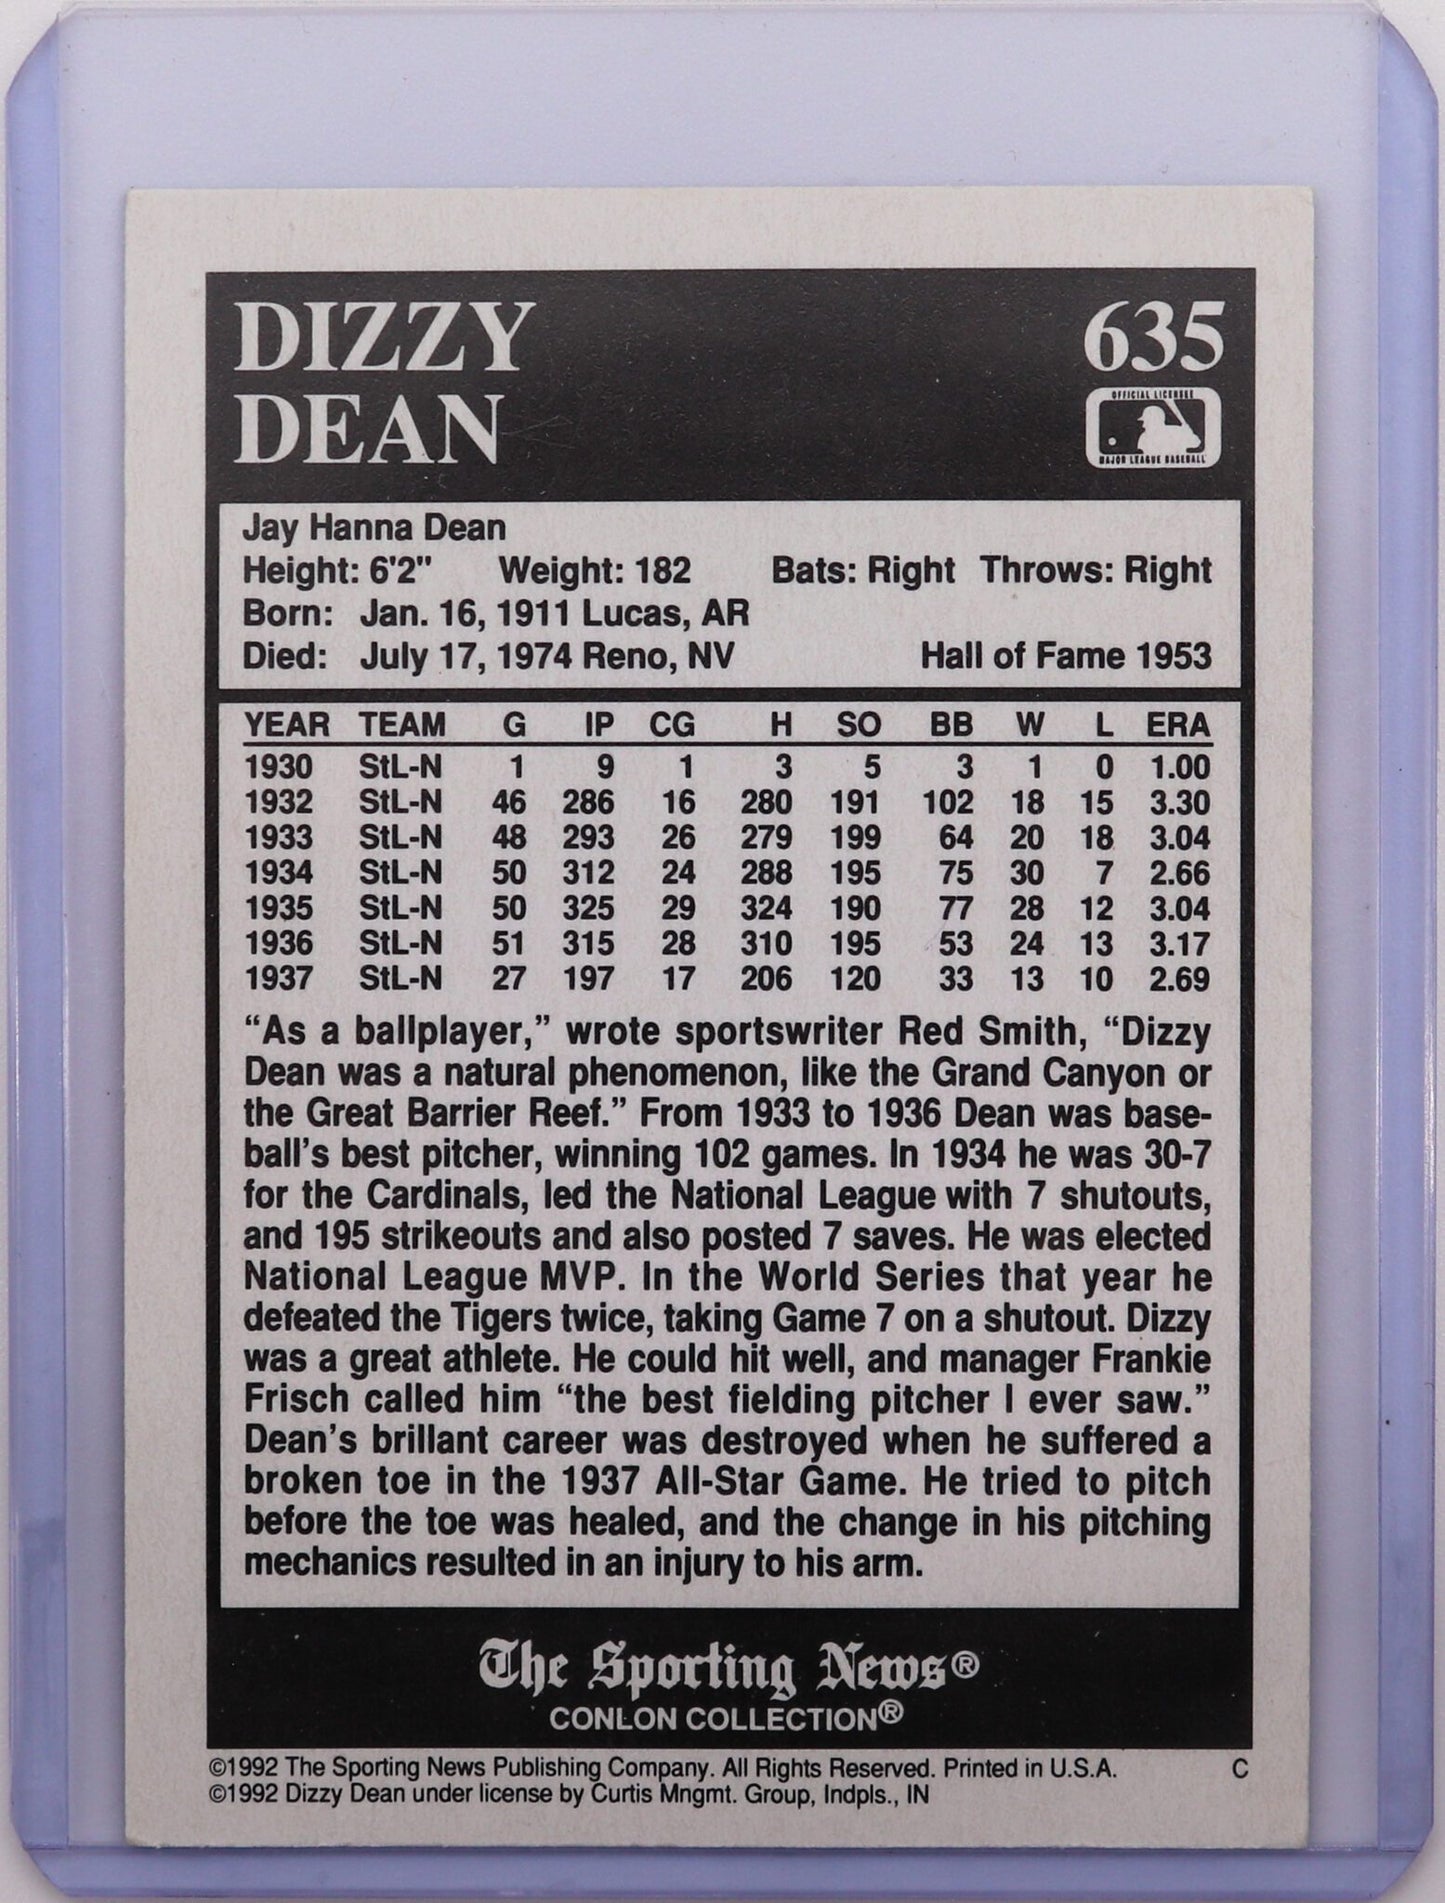 1992 The Sporting News Conlon Collection Dizzy Dean #635, Near Mint